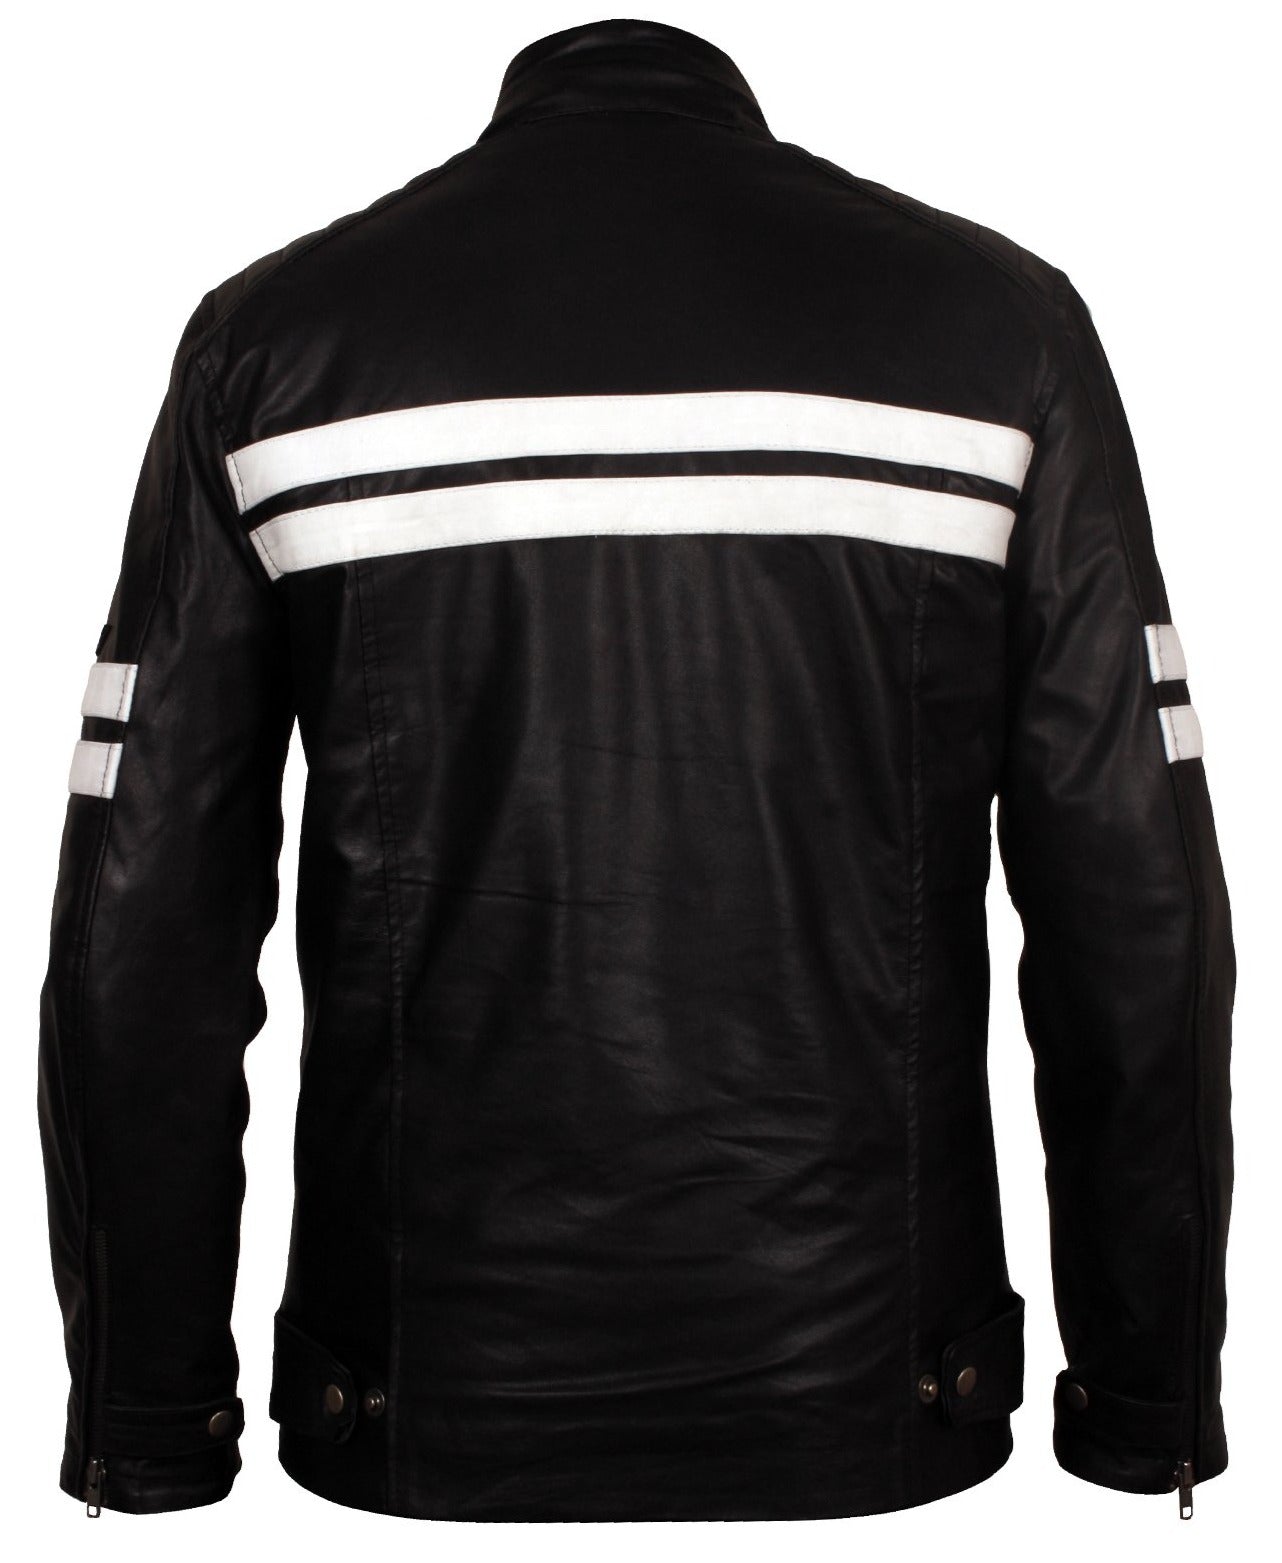 black jacket with white stripes